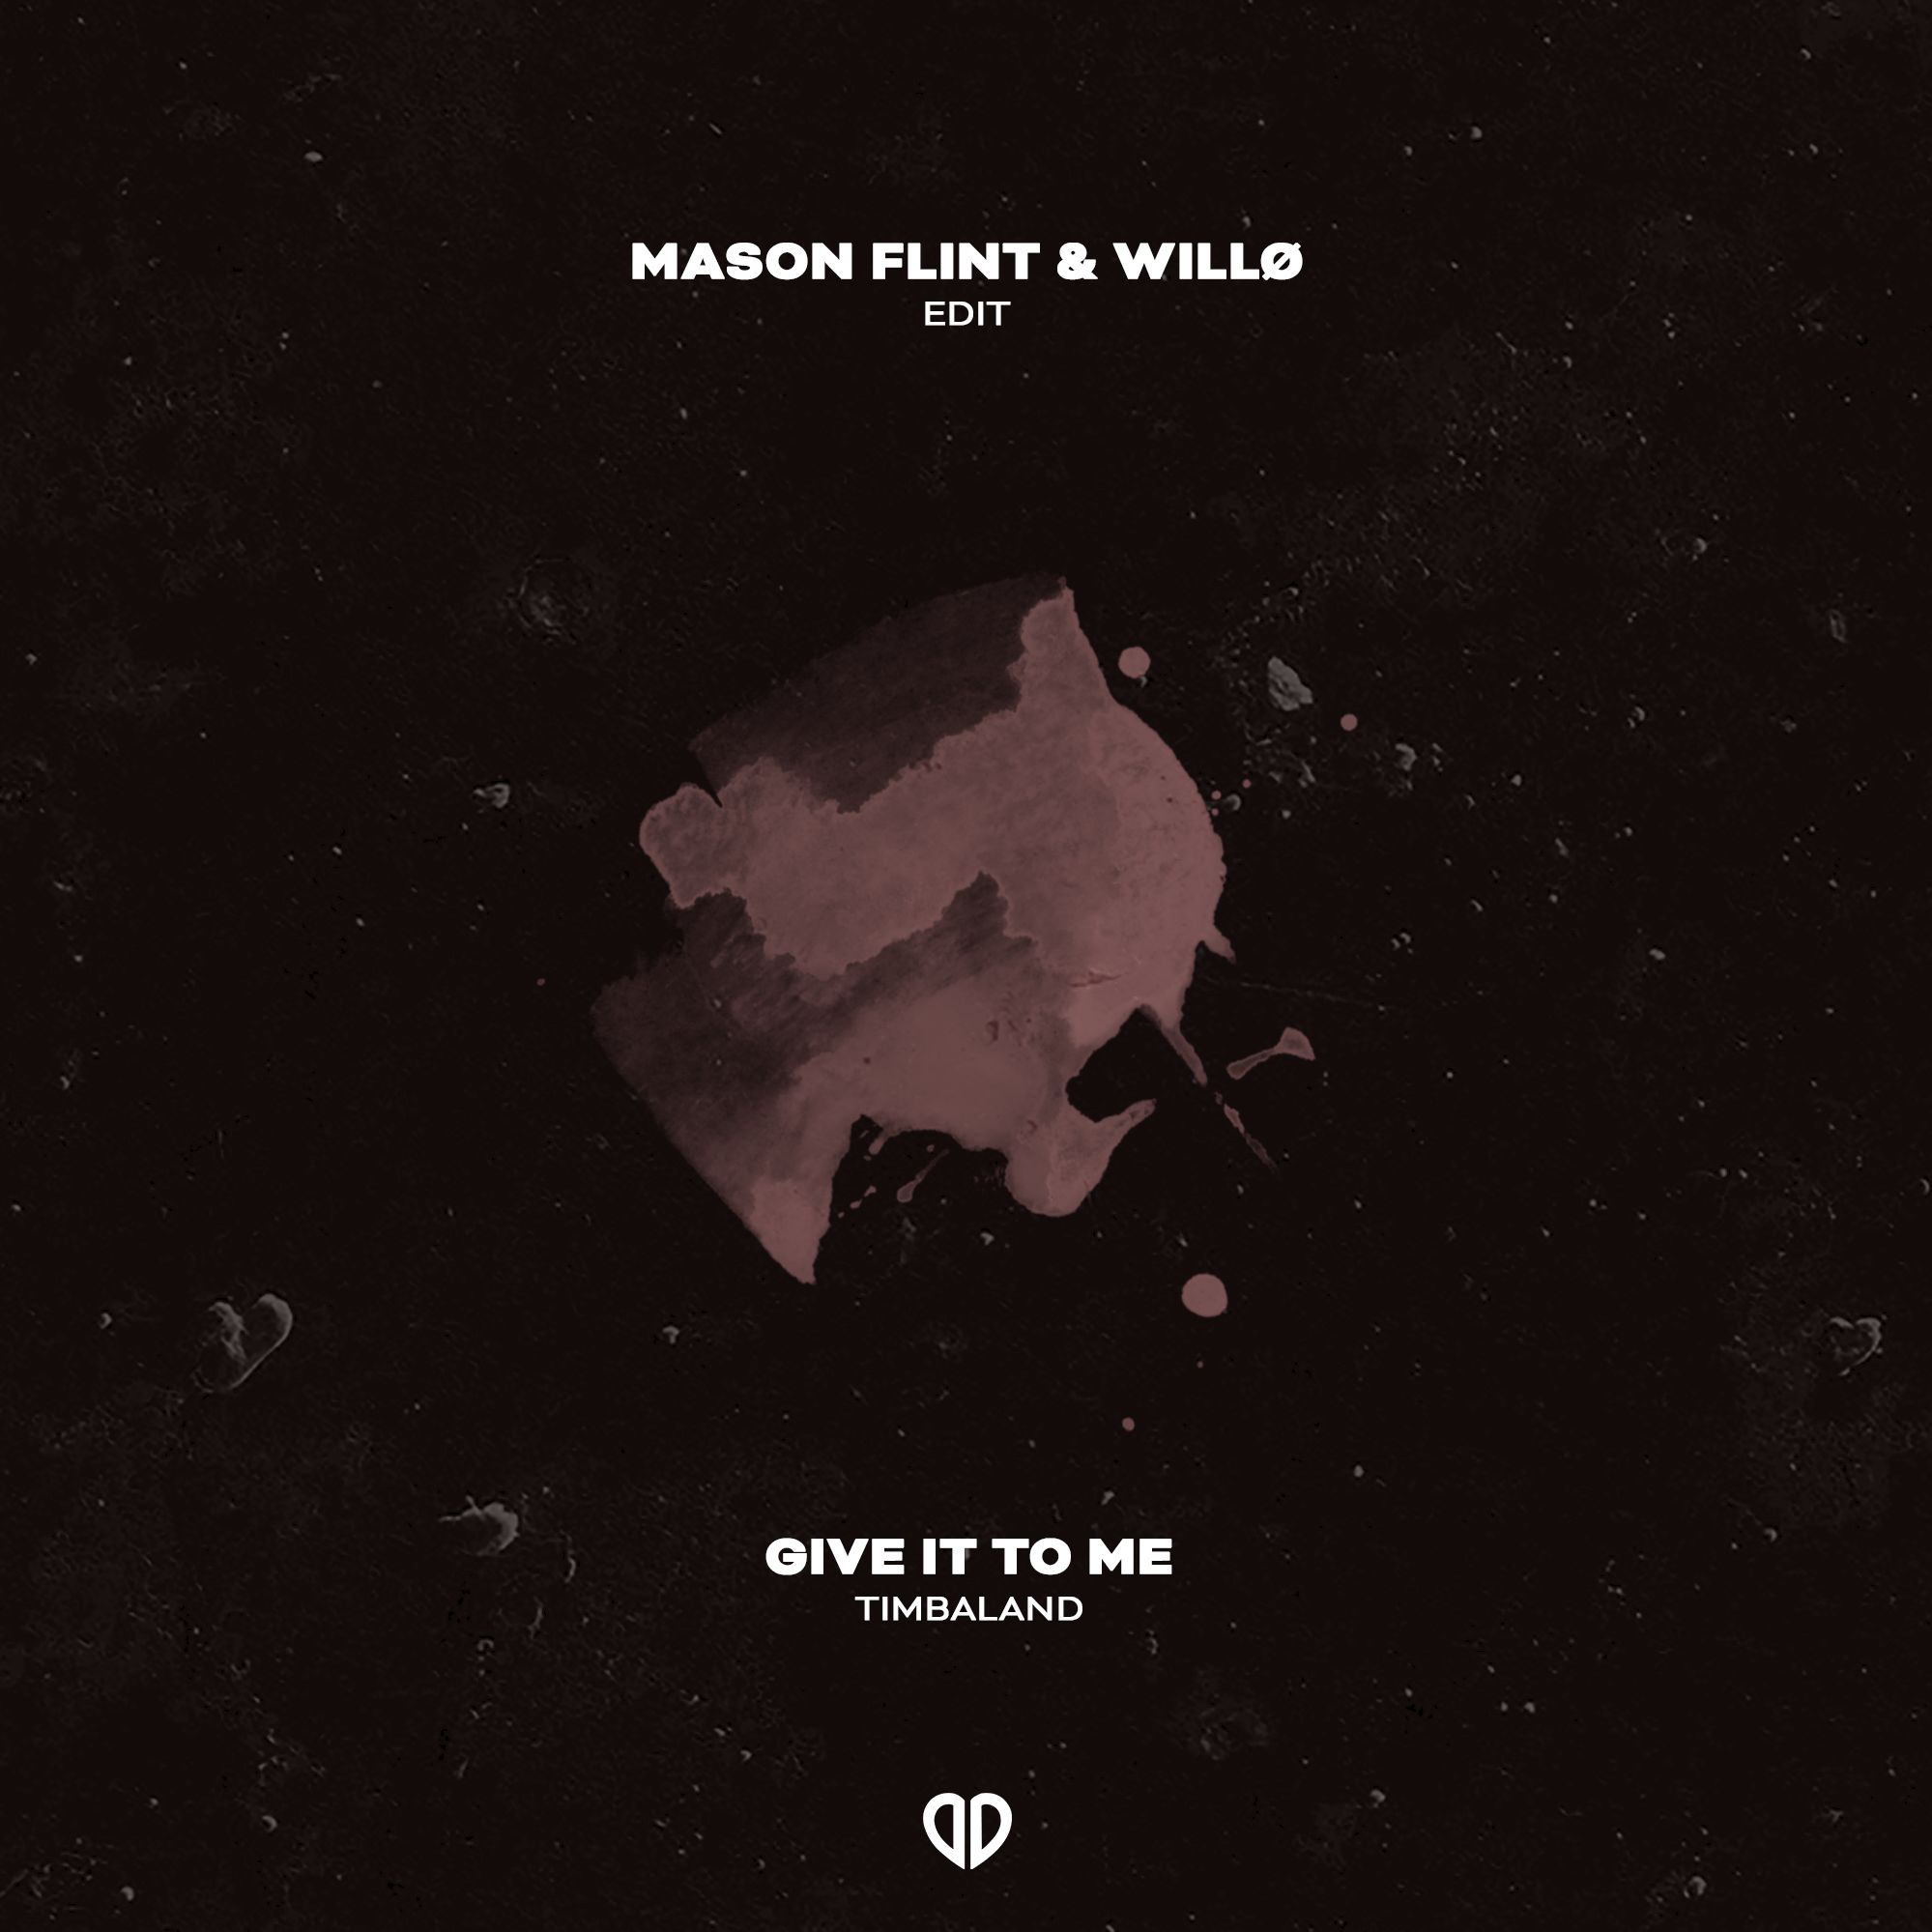 Budata Timbaland - Give It To Me (Mason Flint & Willo Edit) [DropUnited Exclusive]